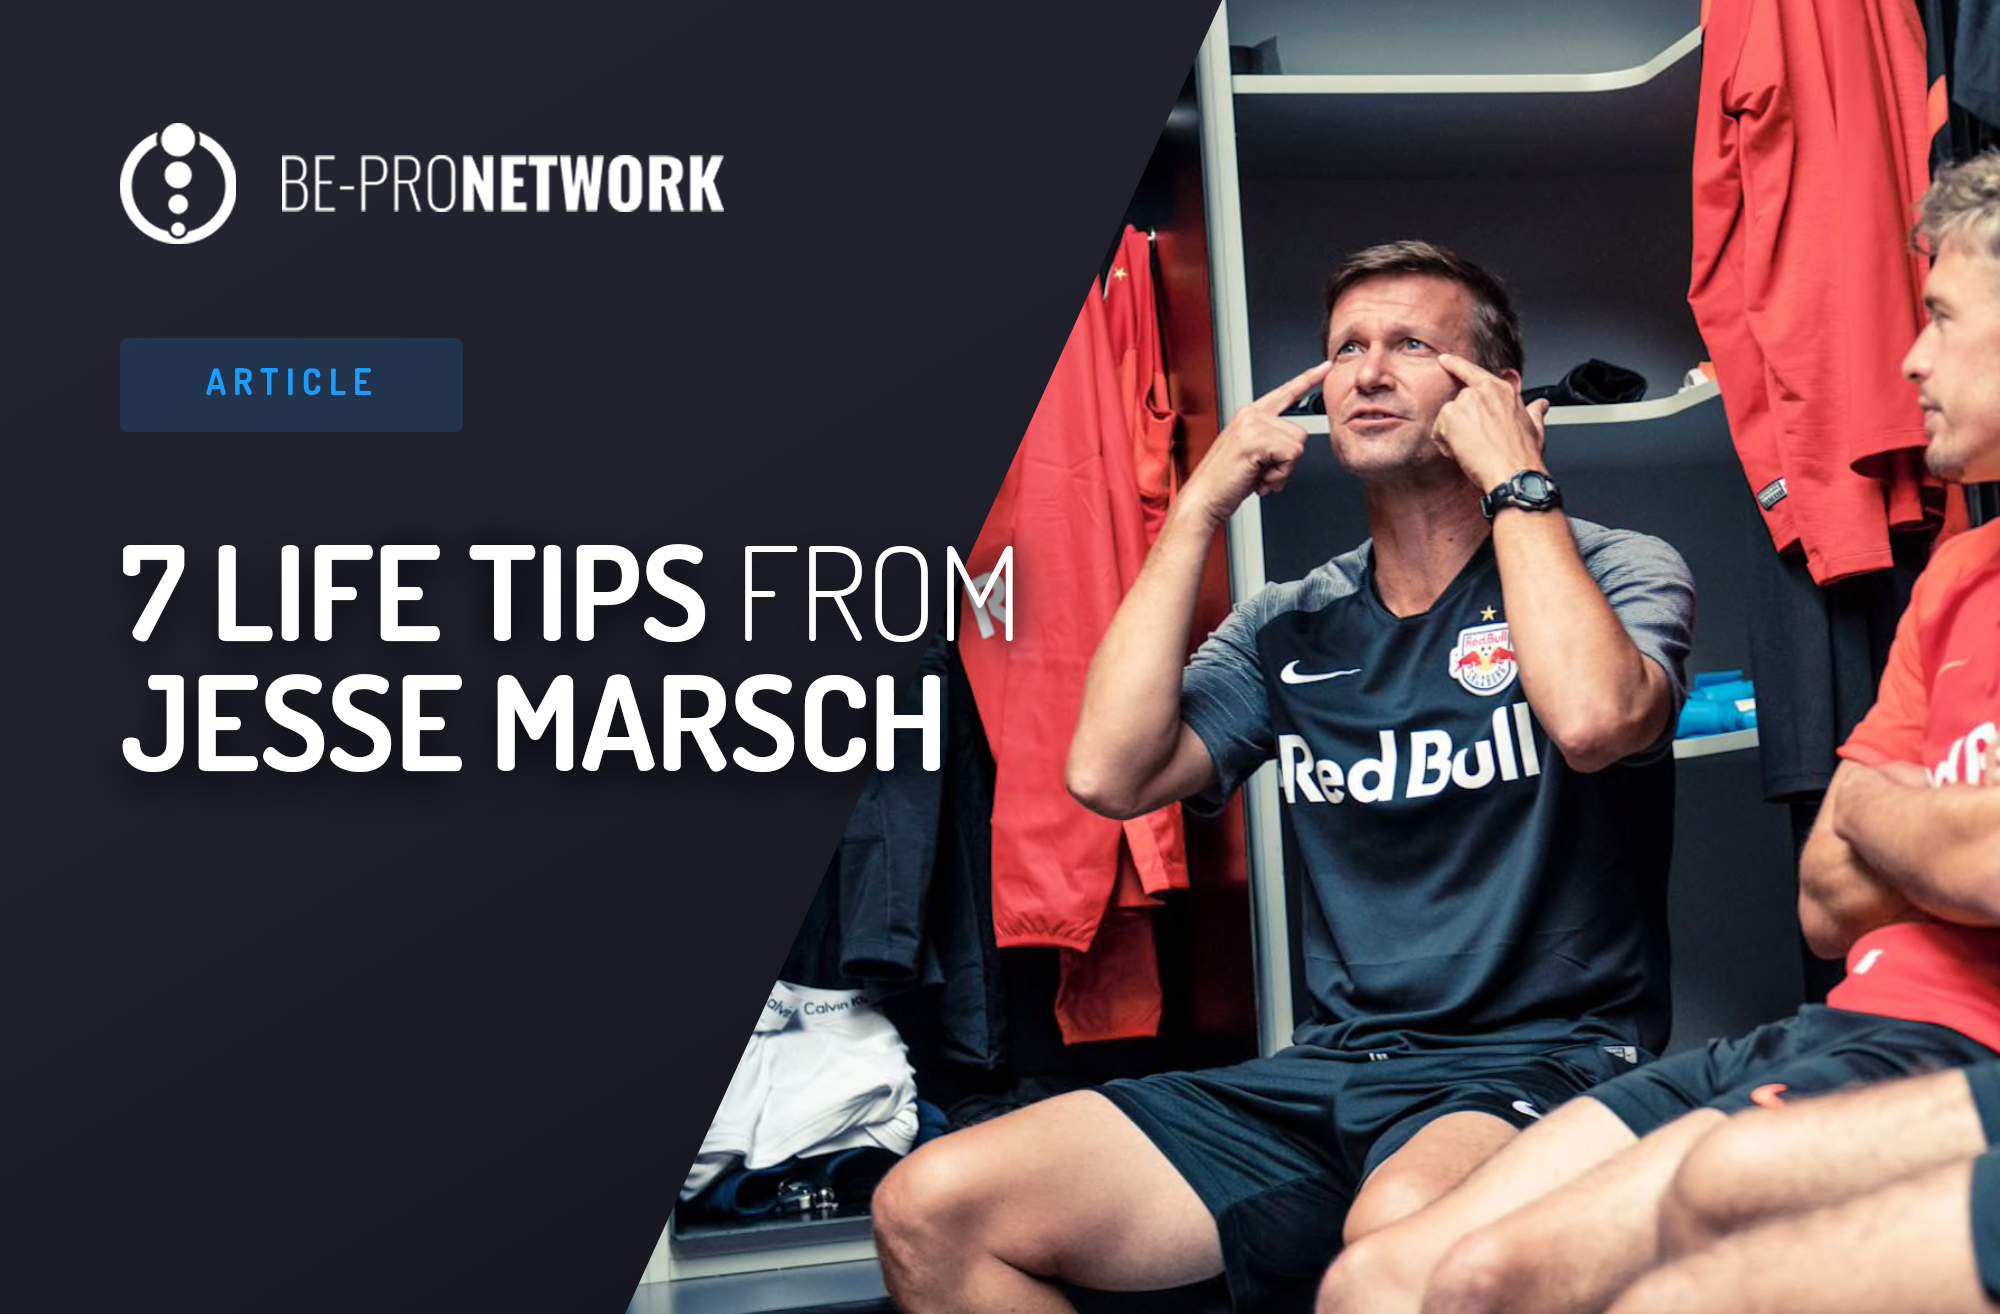 7 motivation tips from Jesse Marsch